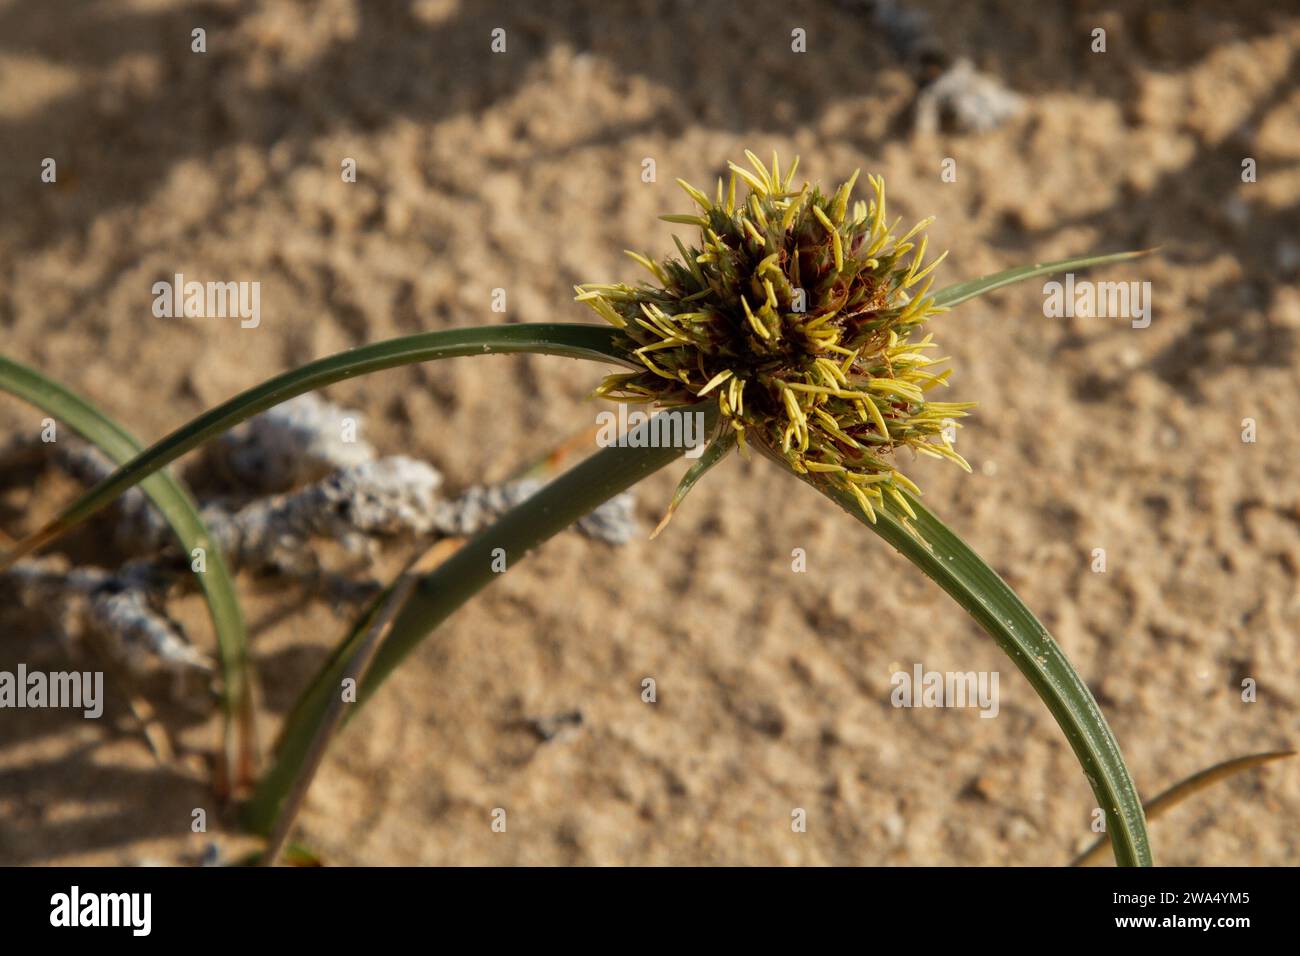 Cyperus capitatus flowering on sand dunes Photographed in the Mediterranean Coastal plains, Israel Stock Photo